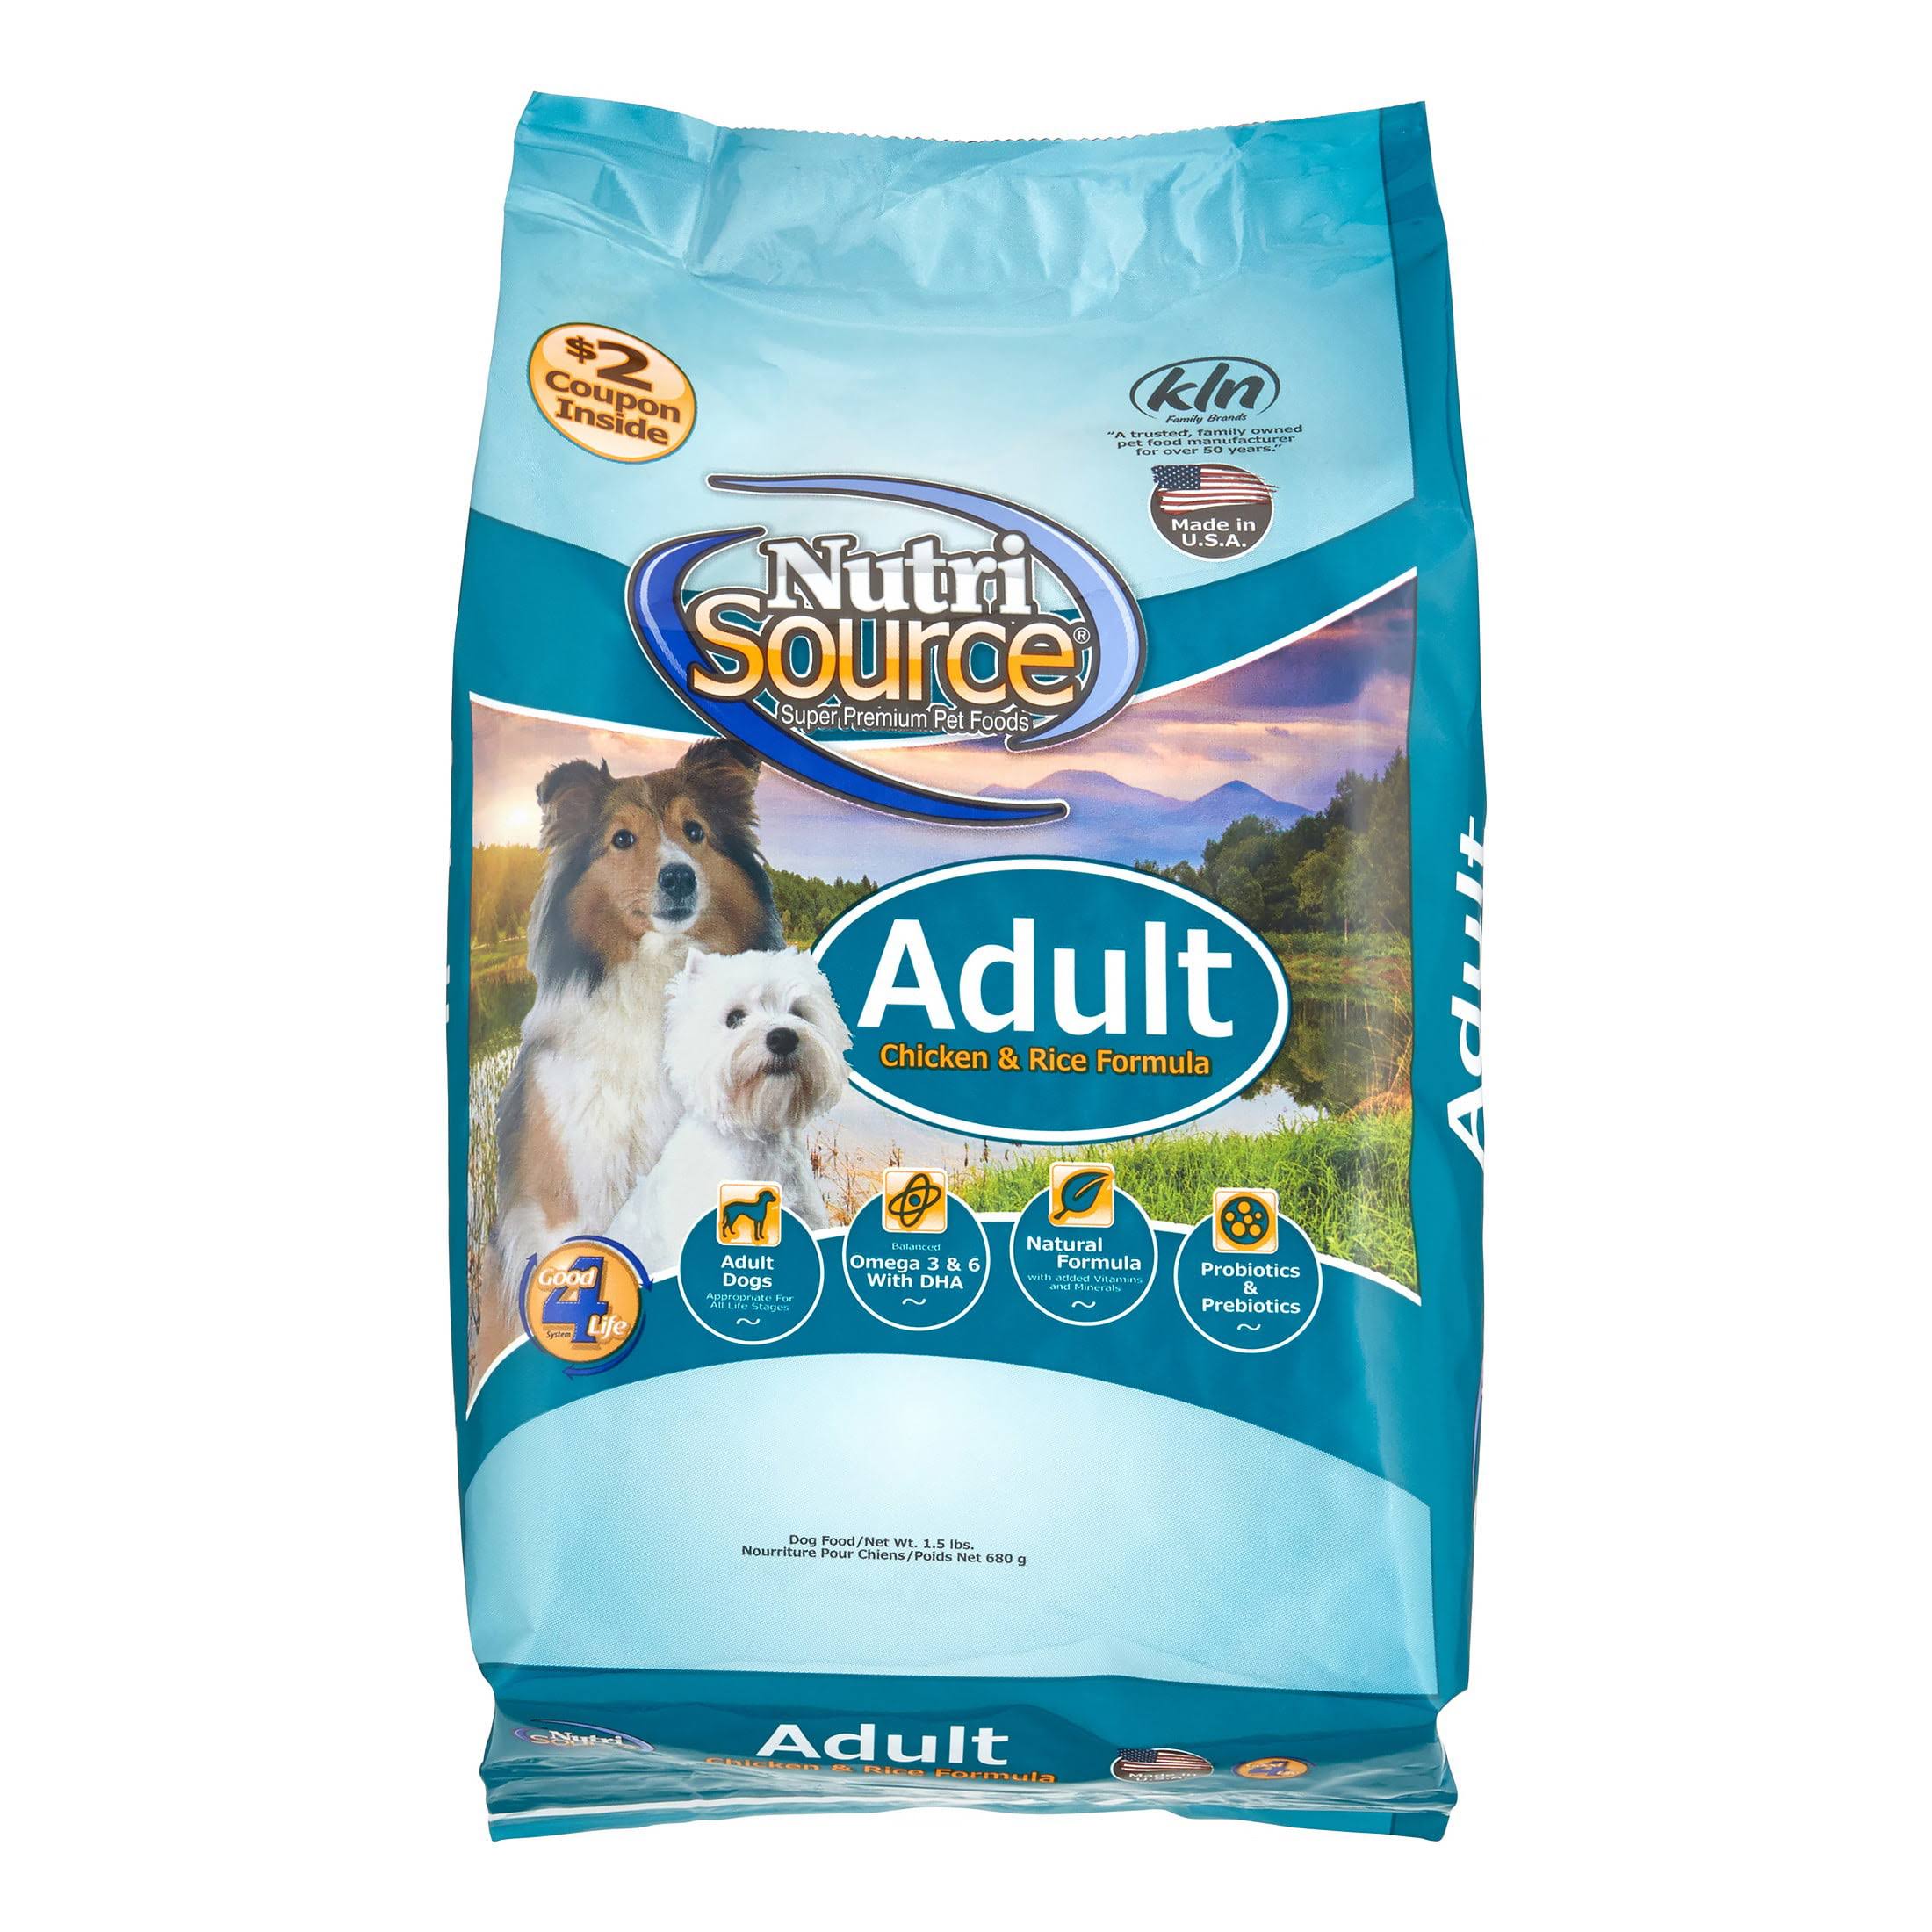 Nutri Source Adult Dog Food - Chicken & Rice Formula